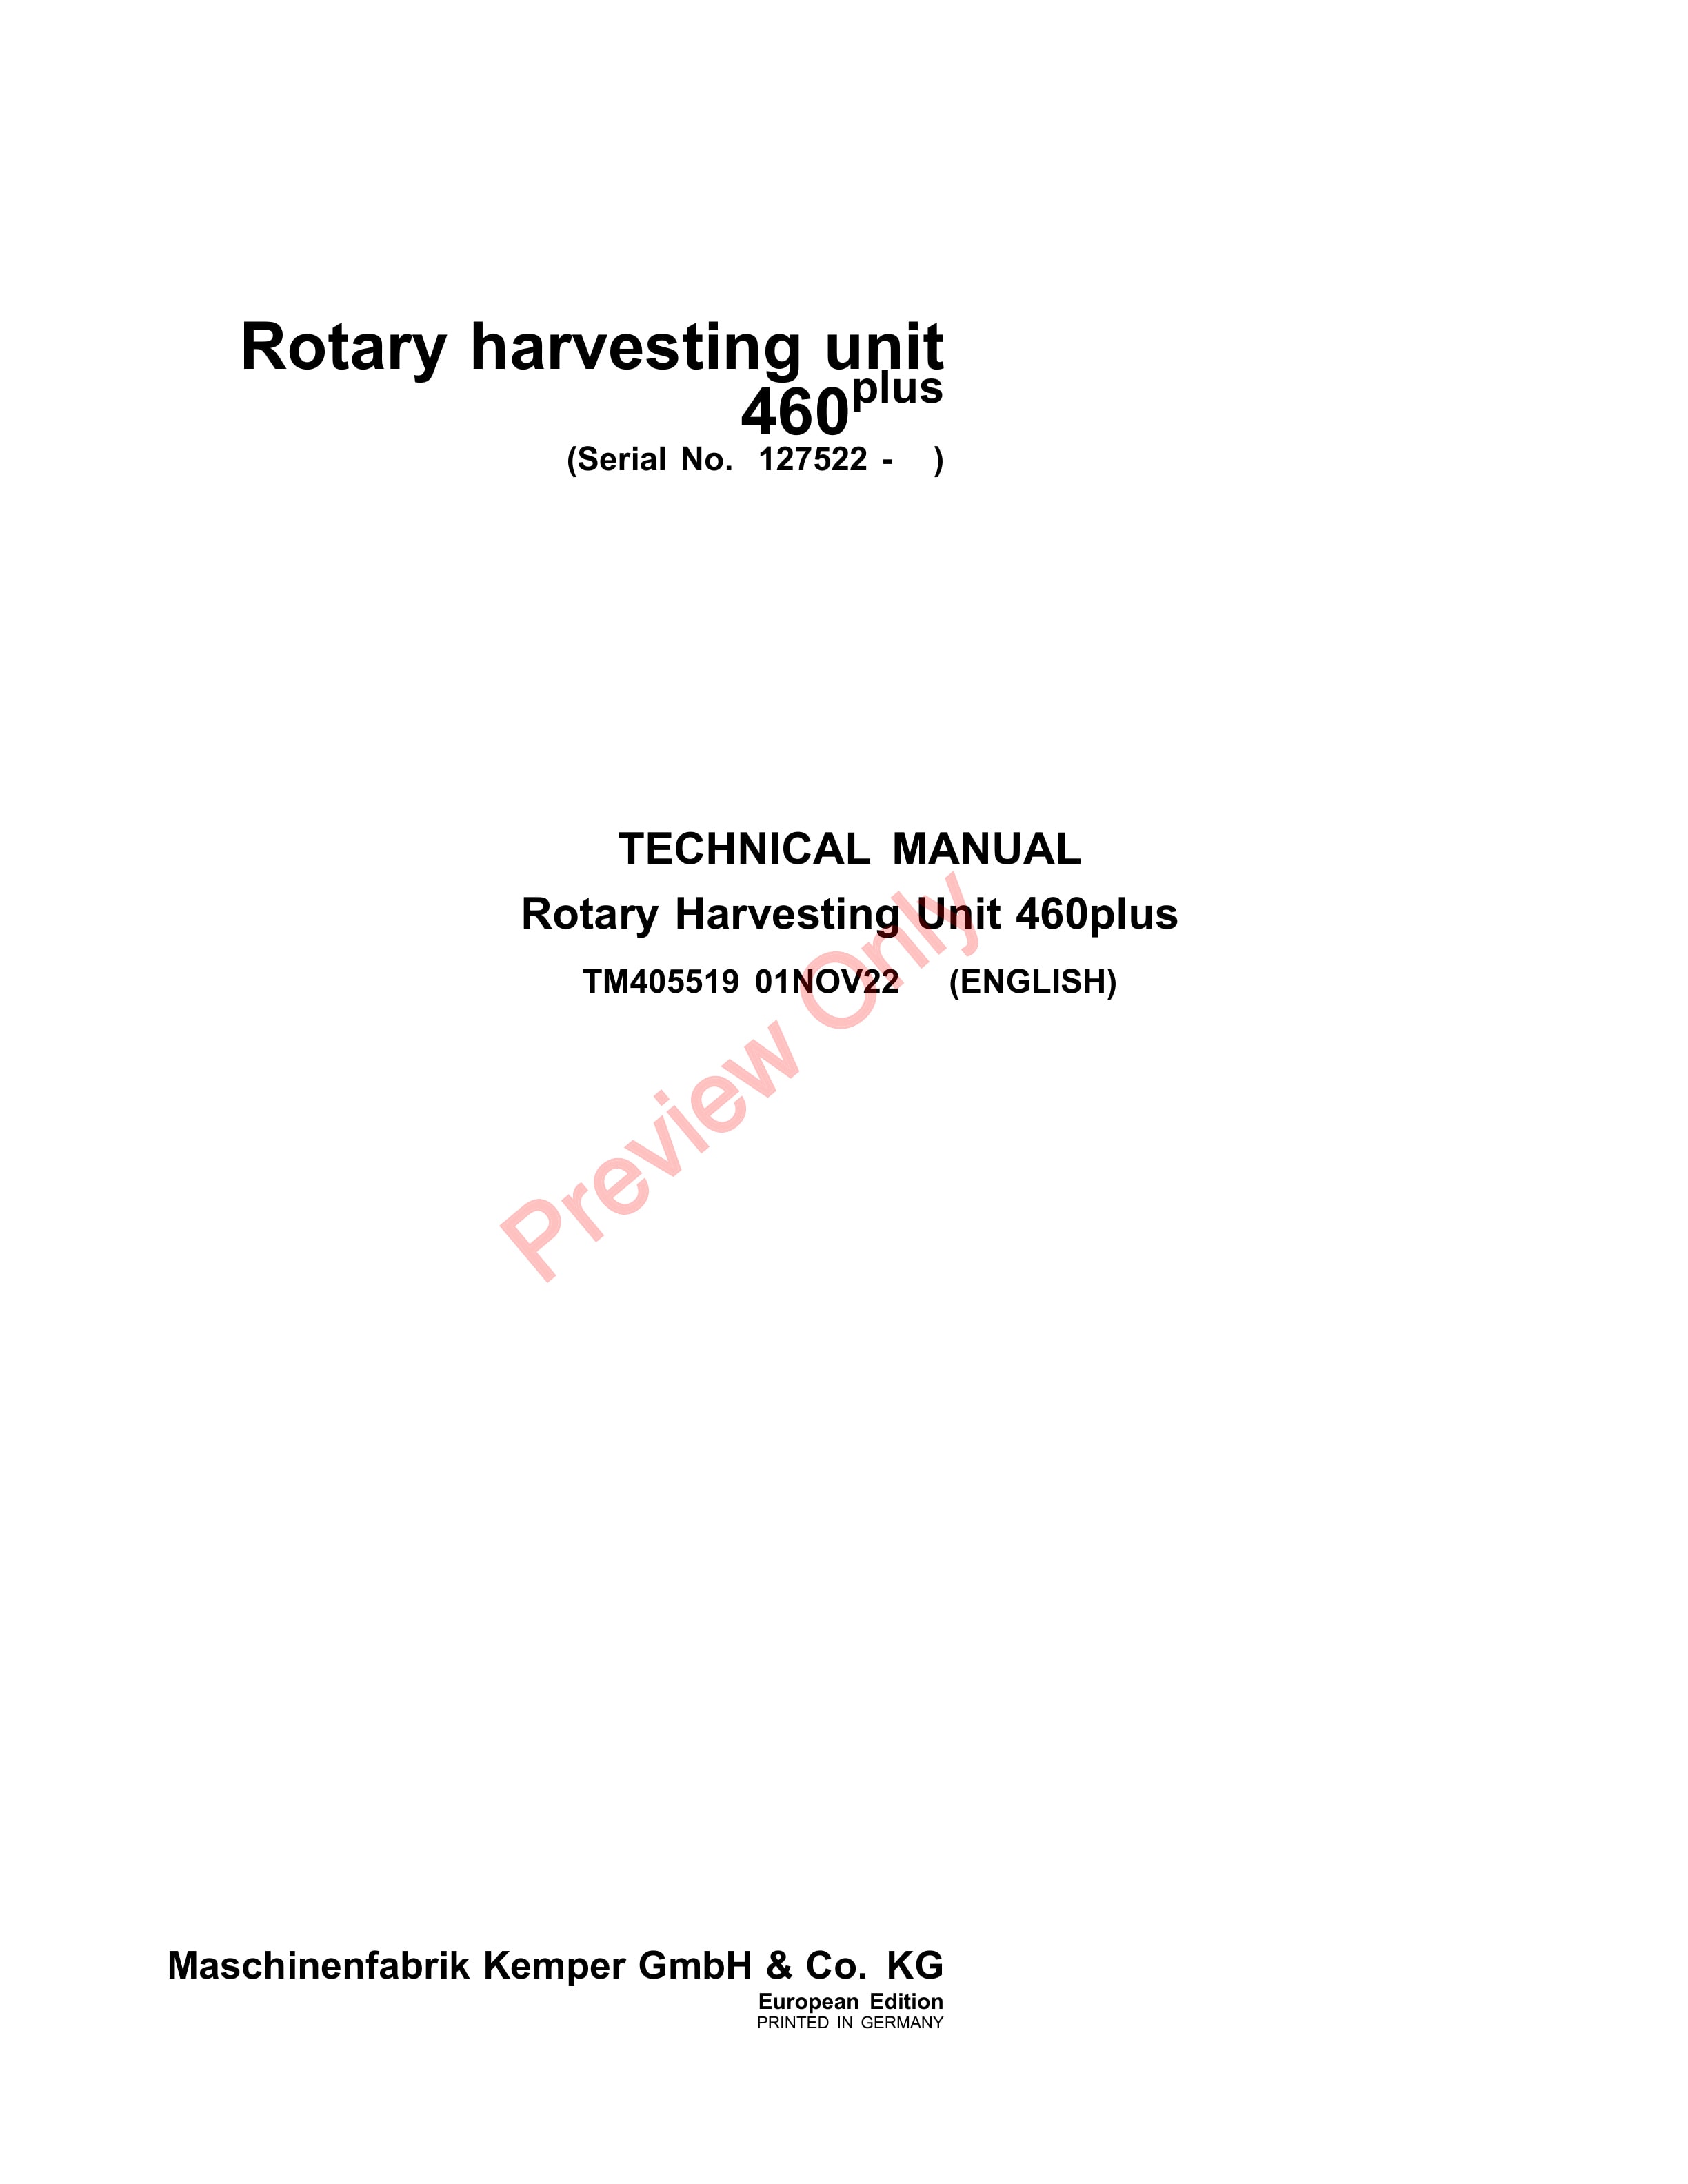 John Deere 460 Rotary Harvesting Units Technical Manual TM405519 01NOV22 1